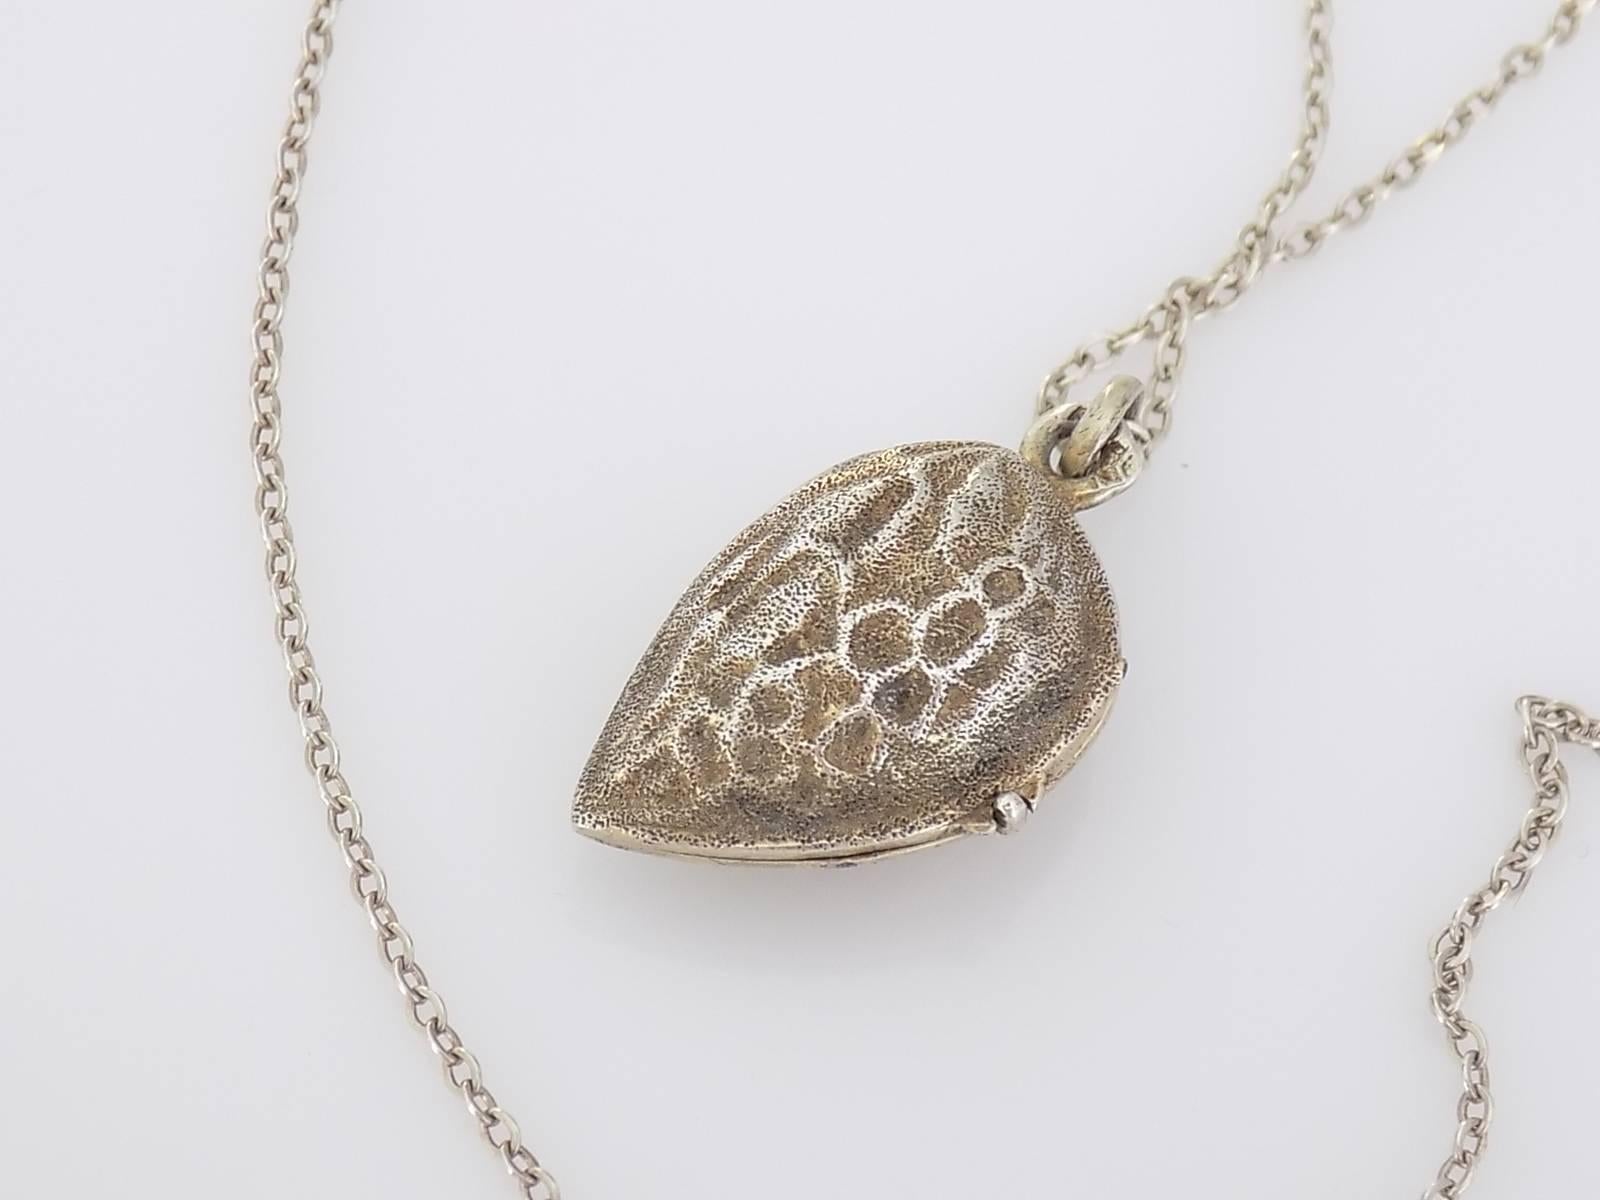 Women's Victorian Silver Almond Locket Pendant on Silver Chain Necklace